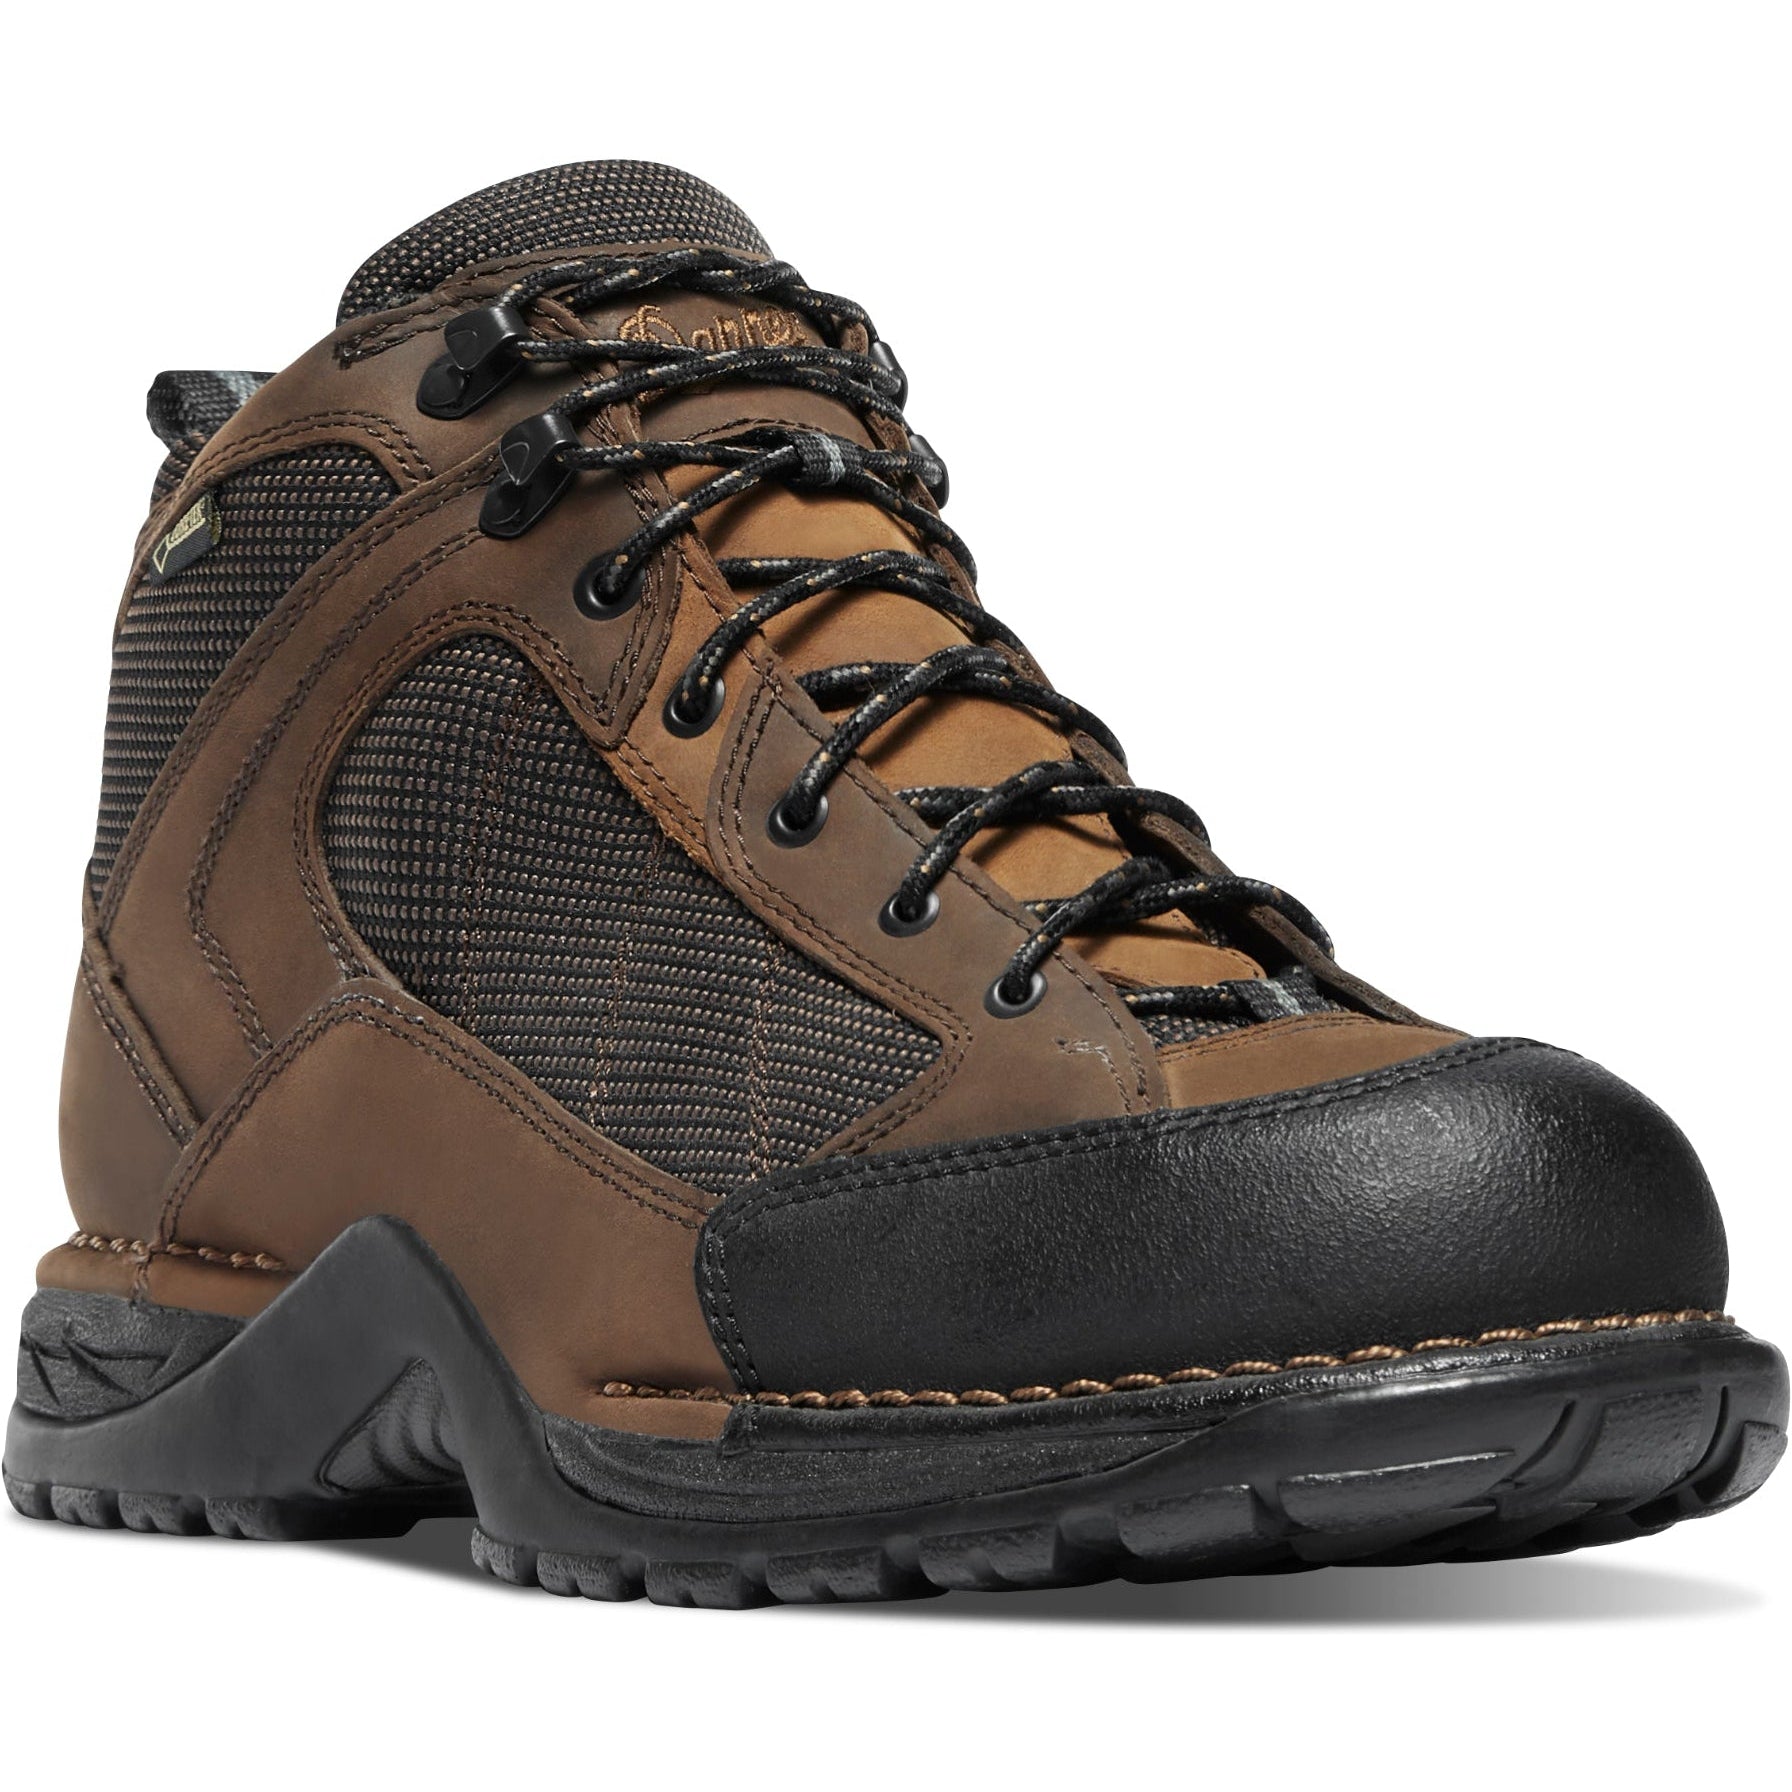 Danner Men's Radical 452 5.5" WP Hiking Boot - Dark Brown - 45254 7 / Medium / Dark Brown - Overlook Boots